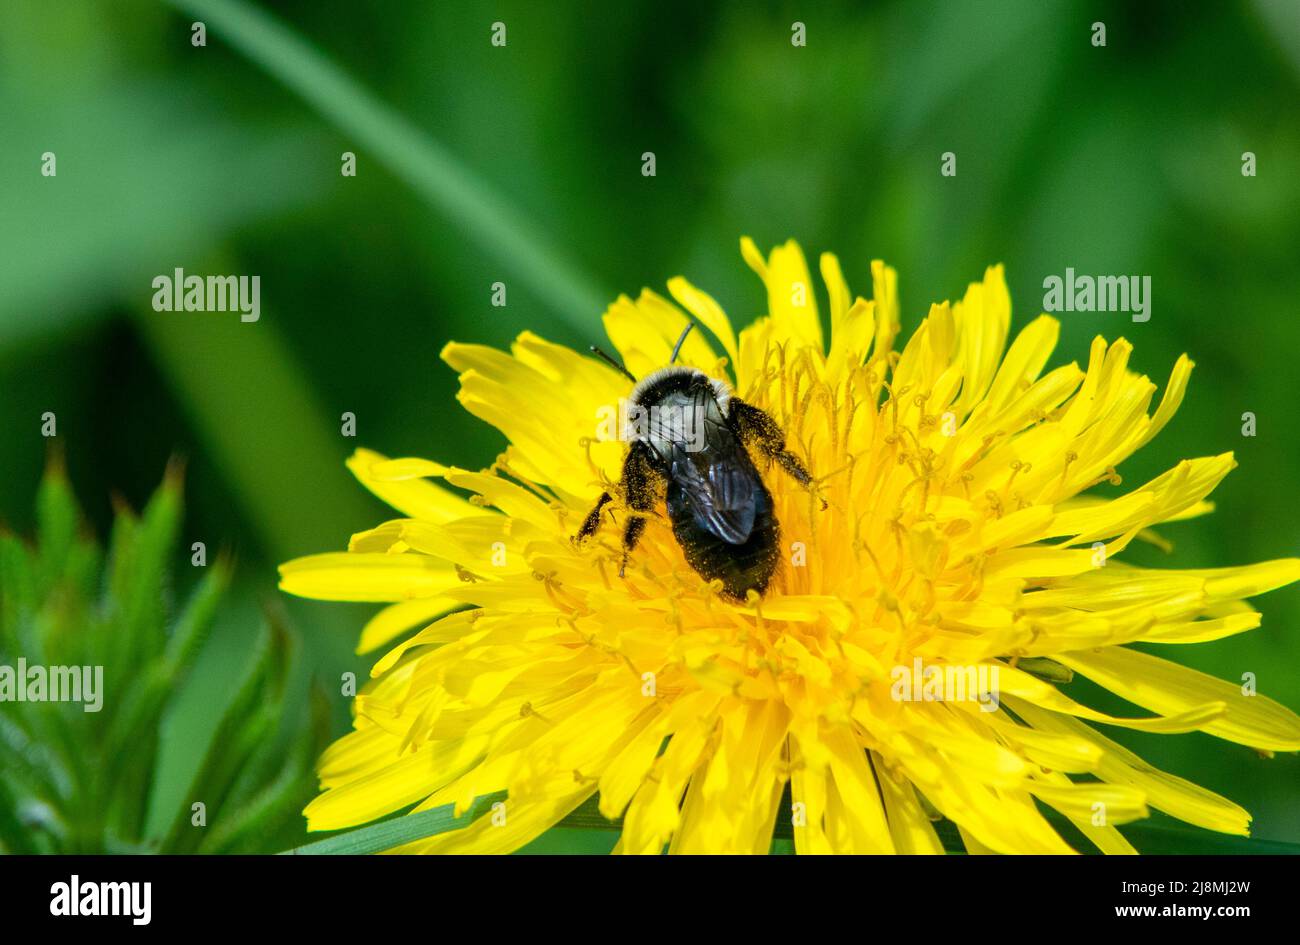 Ashy Mining Bee on Dandelion flower Stock Photo